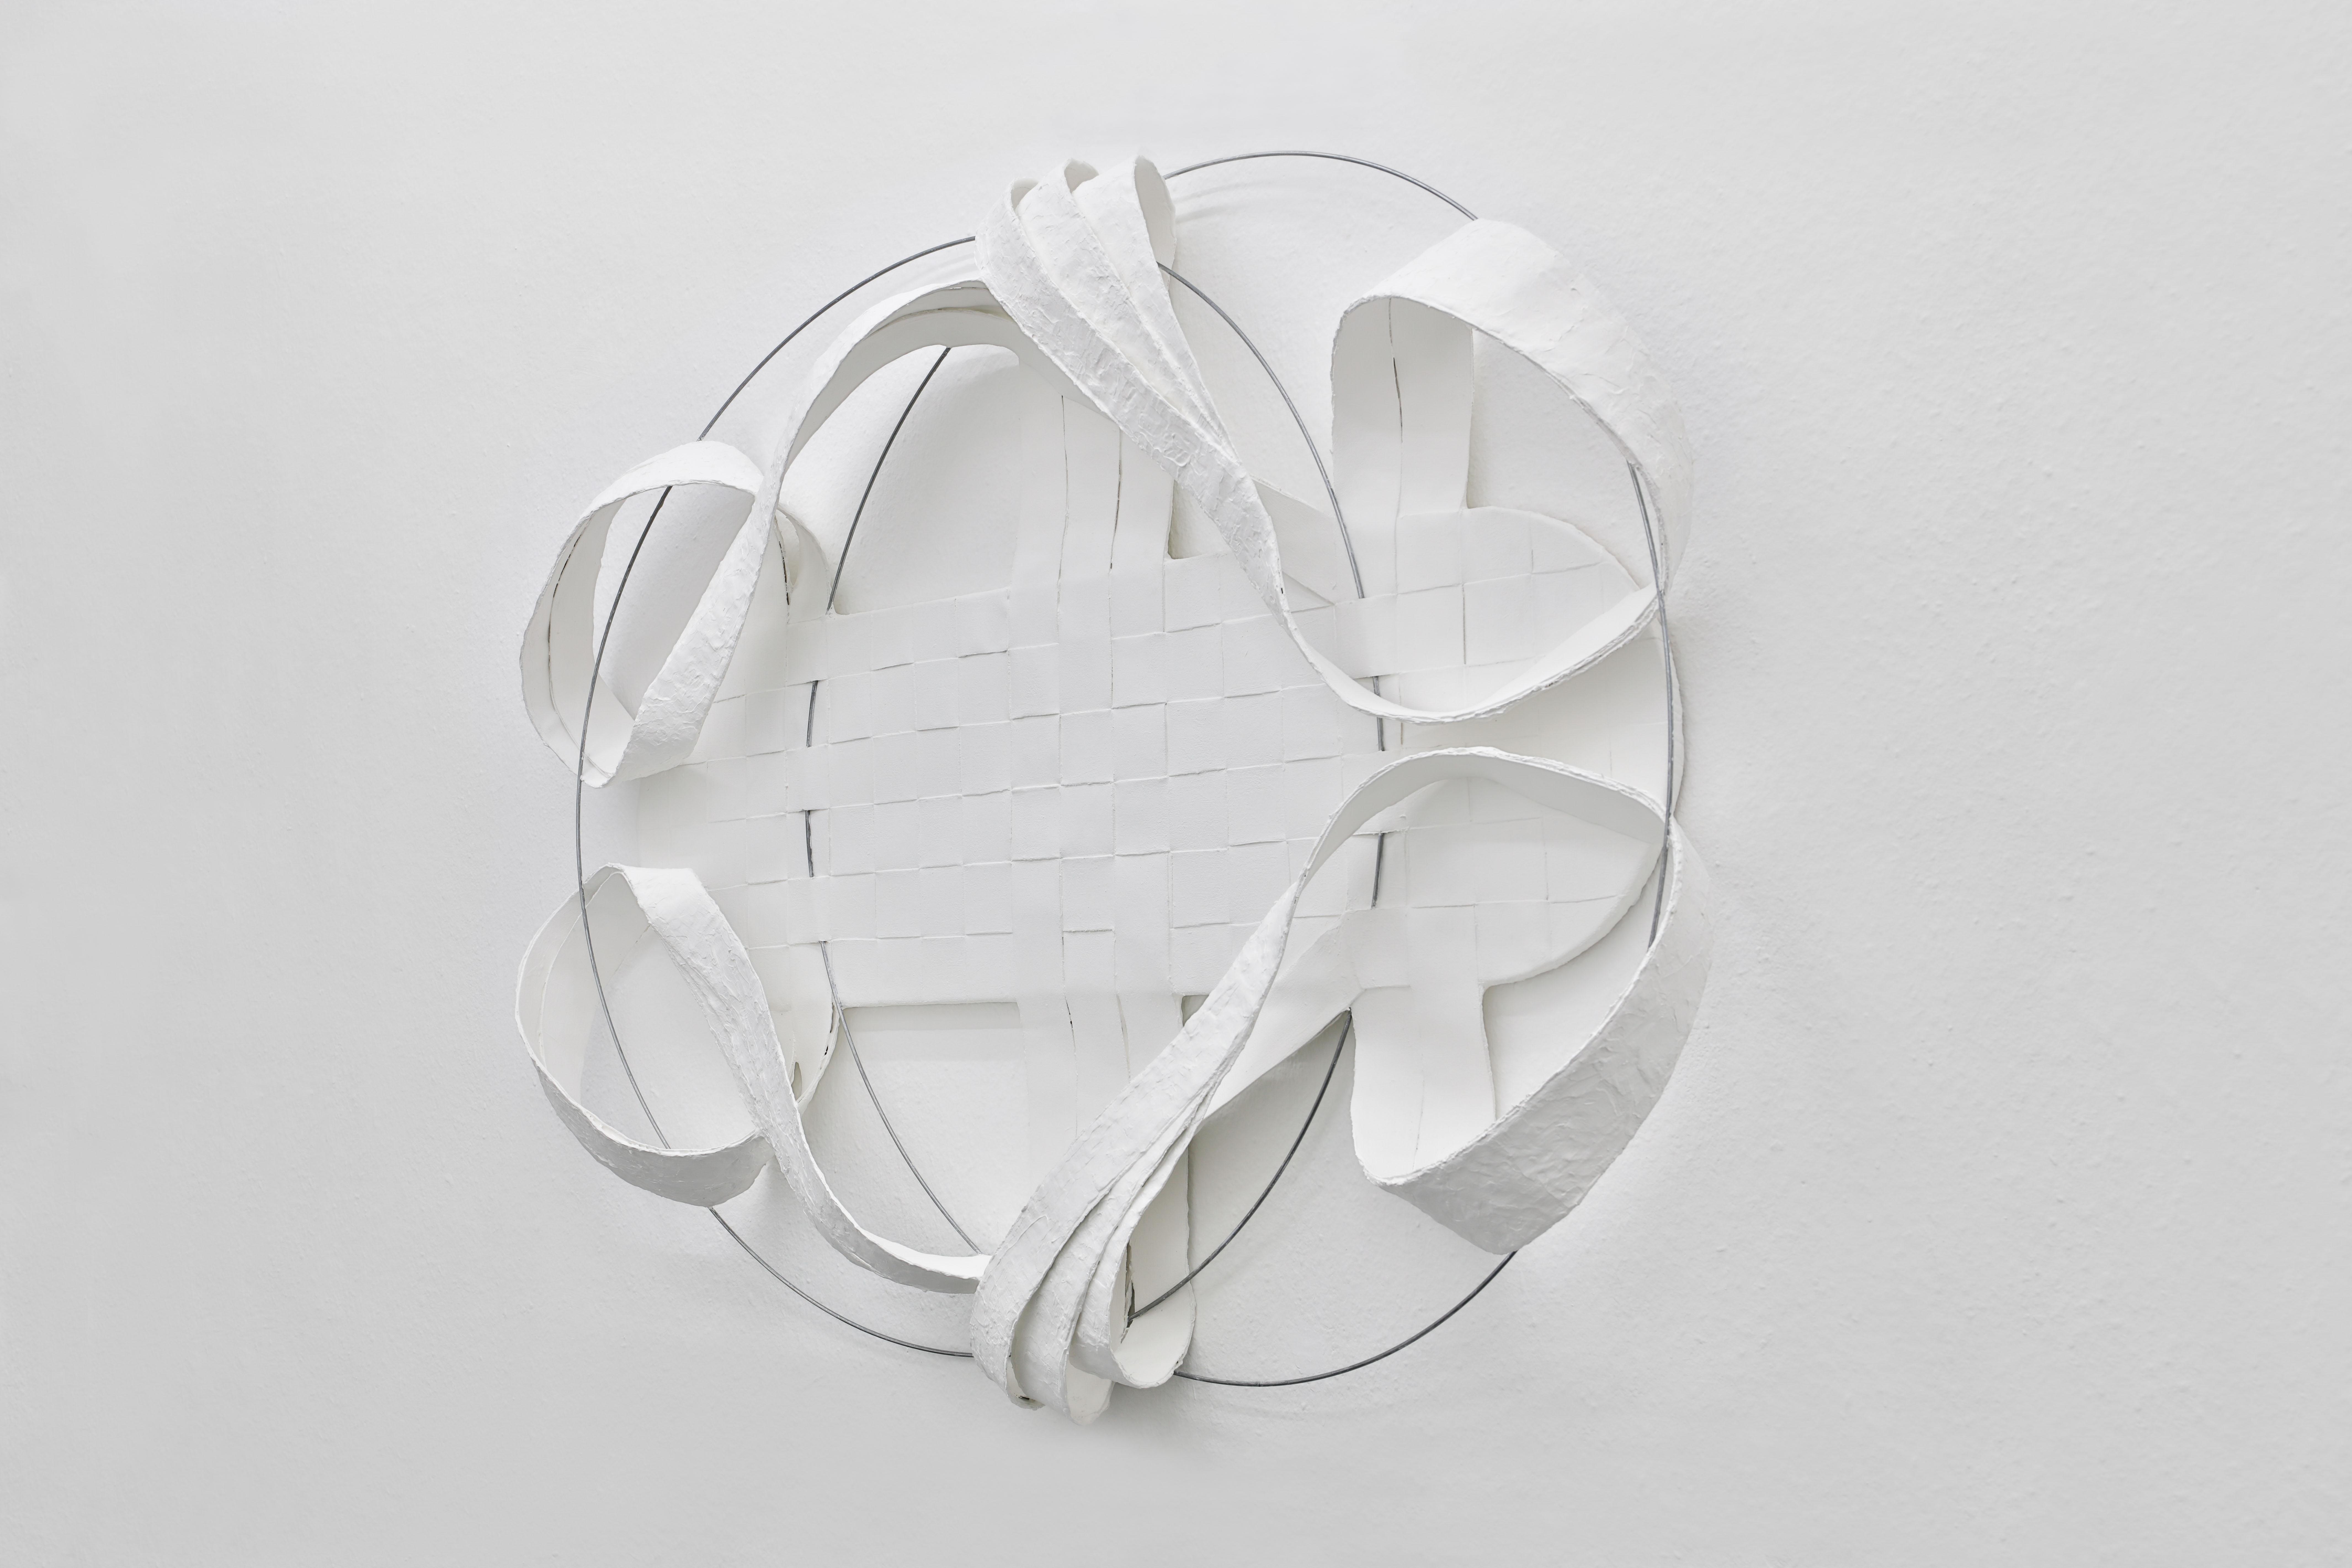 Johanna Odersky, A Path (Score), 2022, Canvas, epoxy clay, wire mesh, steel rings, wood, 135cm x 110cm